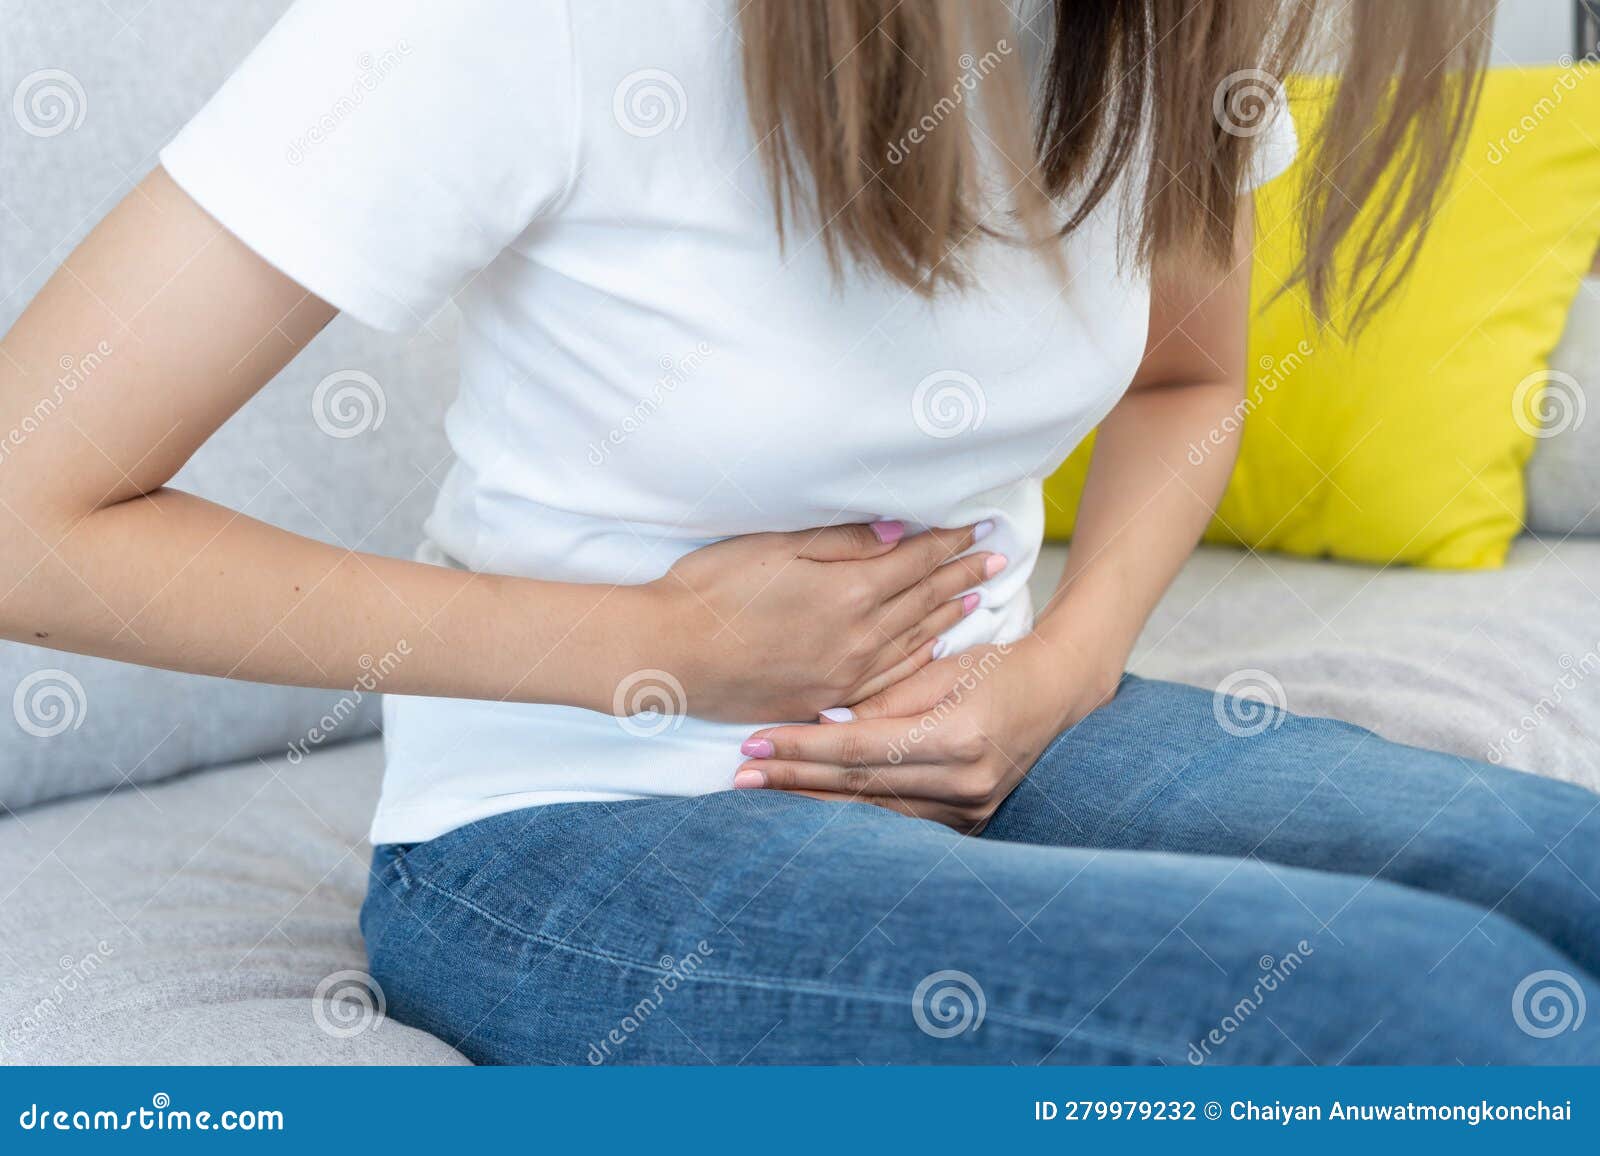 stomach ache. asian women have abdominal pain, indigestion, gastritis, menstrual cramps, flatulence, diarrhea, distention, colon